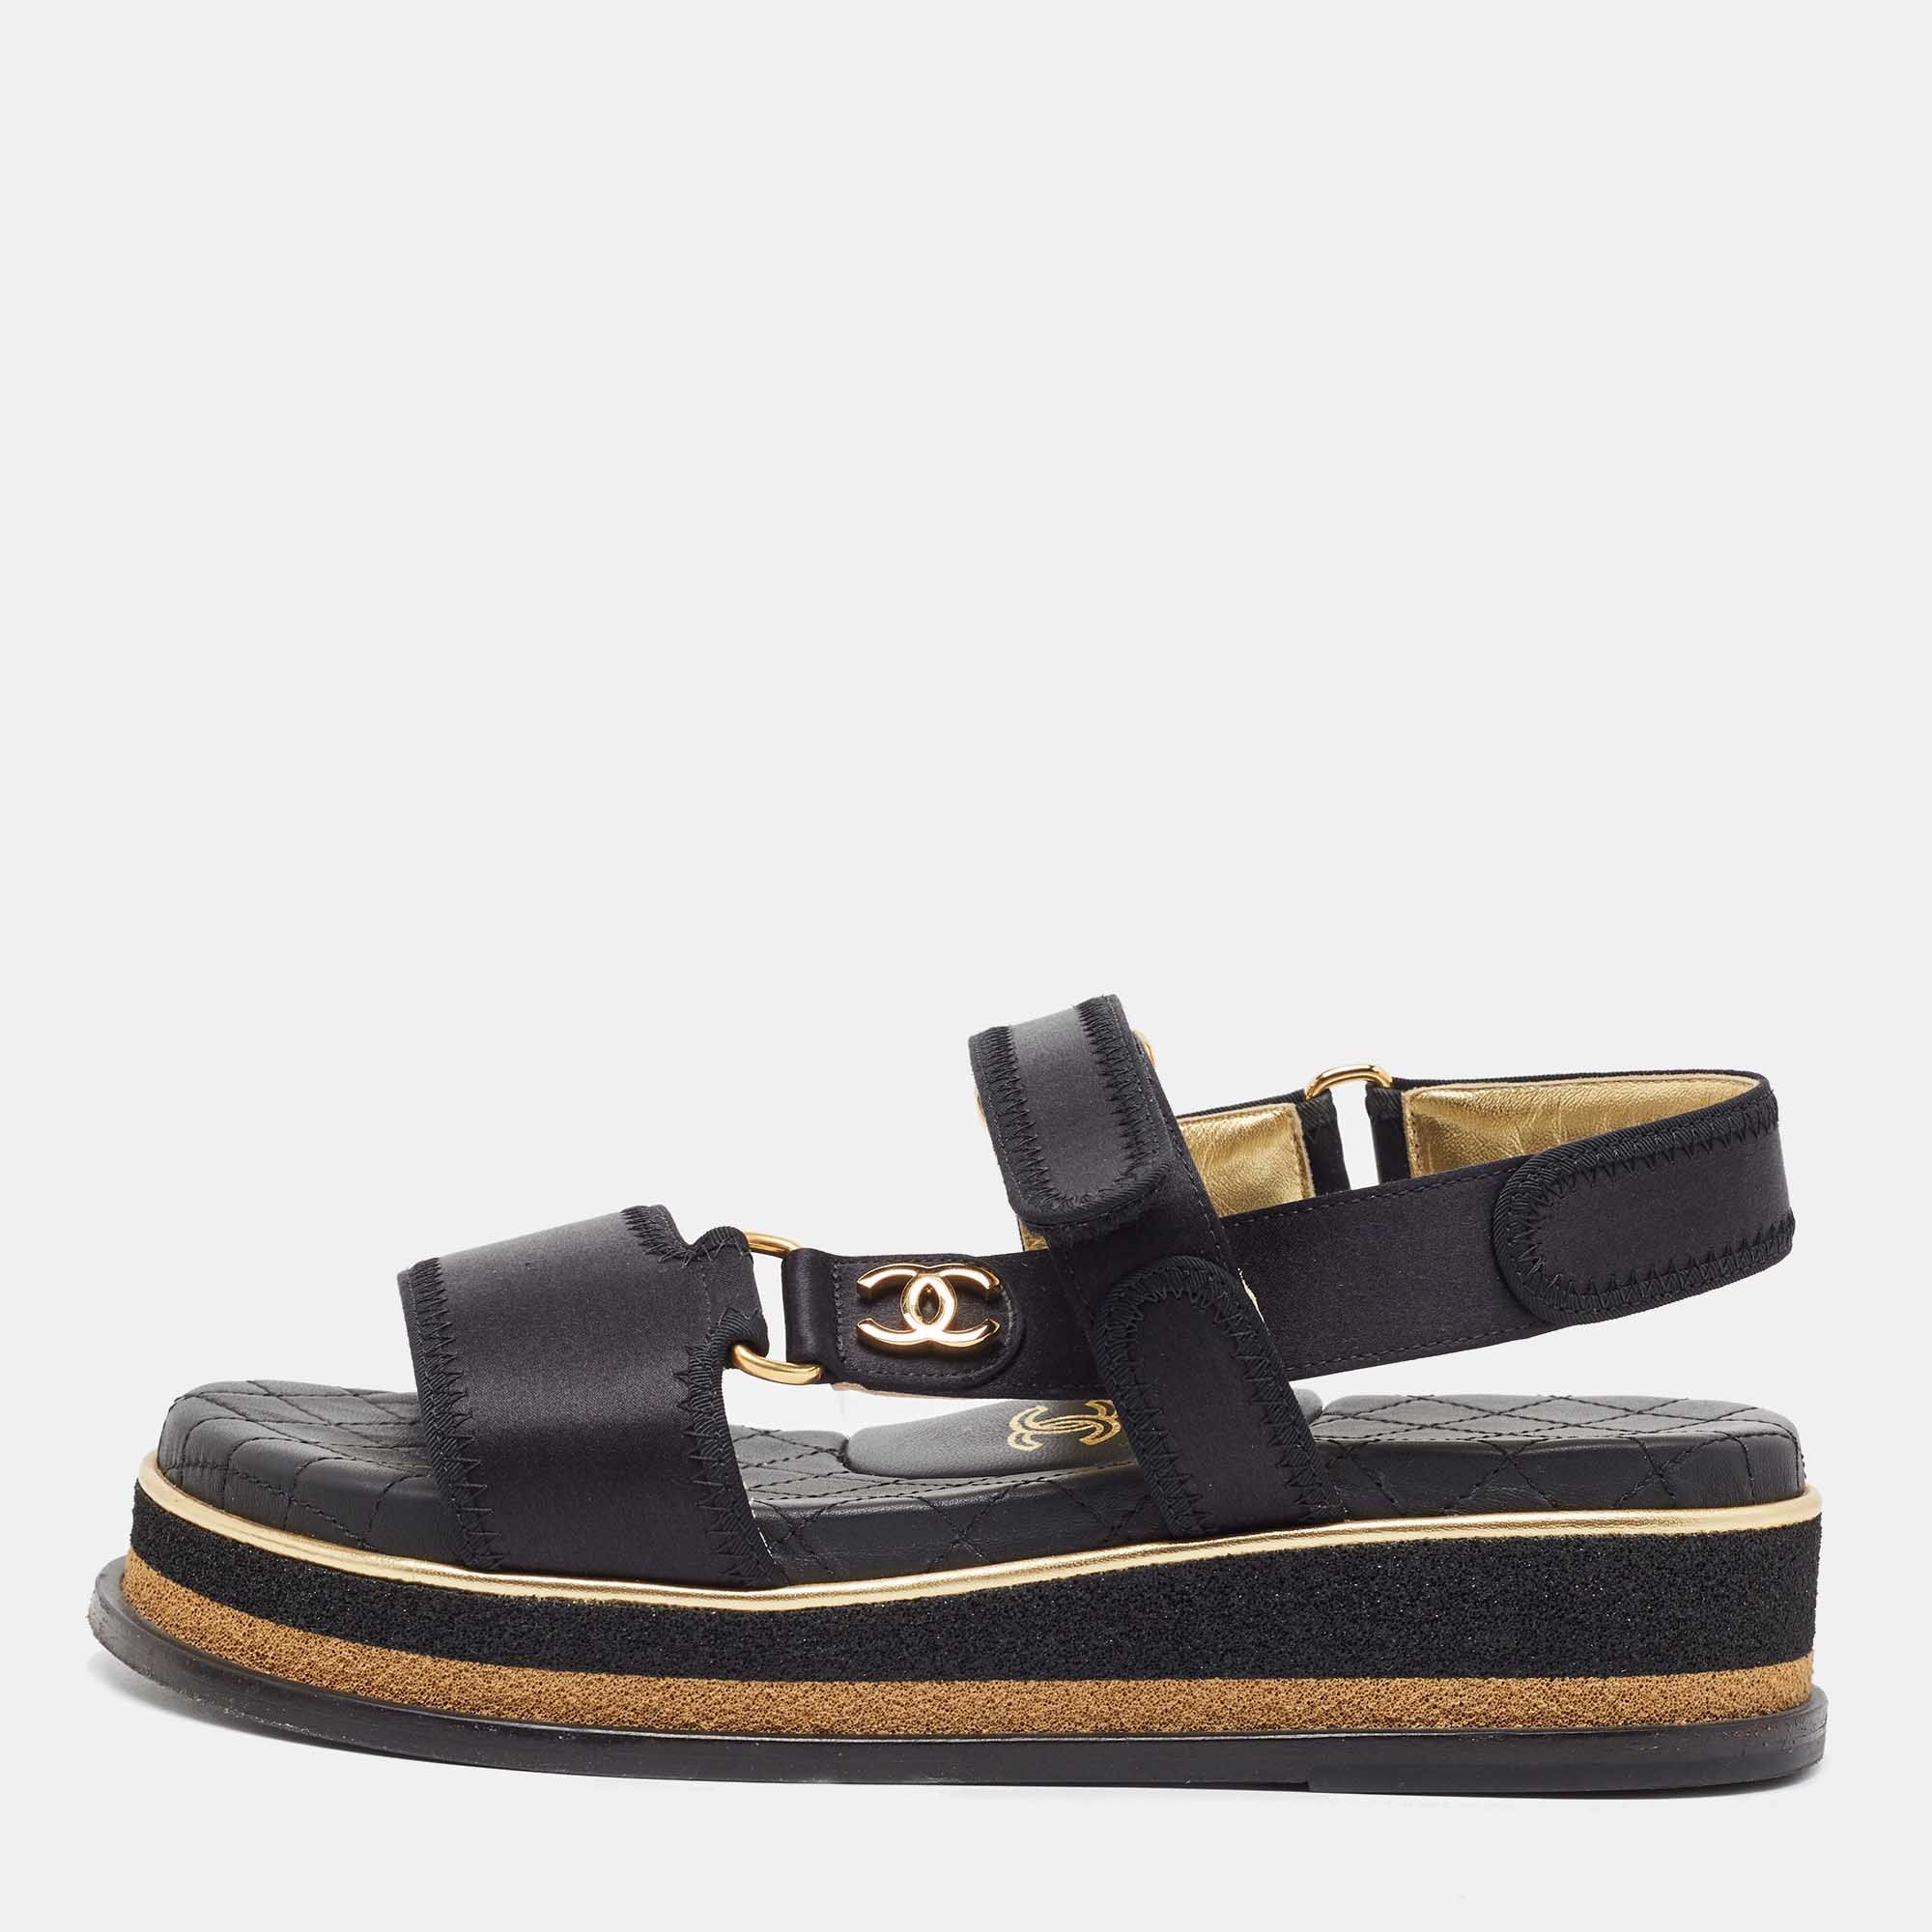 Chanel Black Satin CC Velcro Strap Flat Sandals Size 36 Chanel